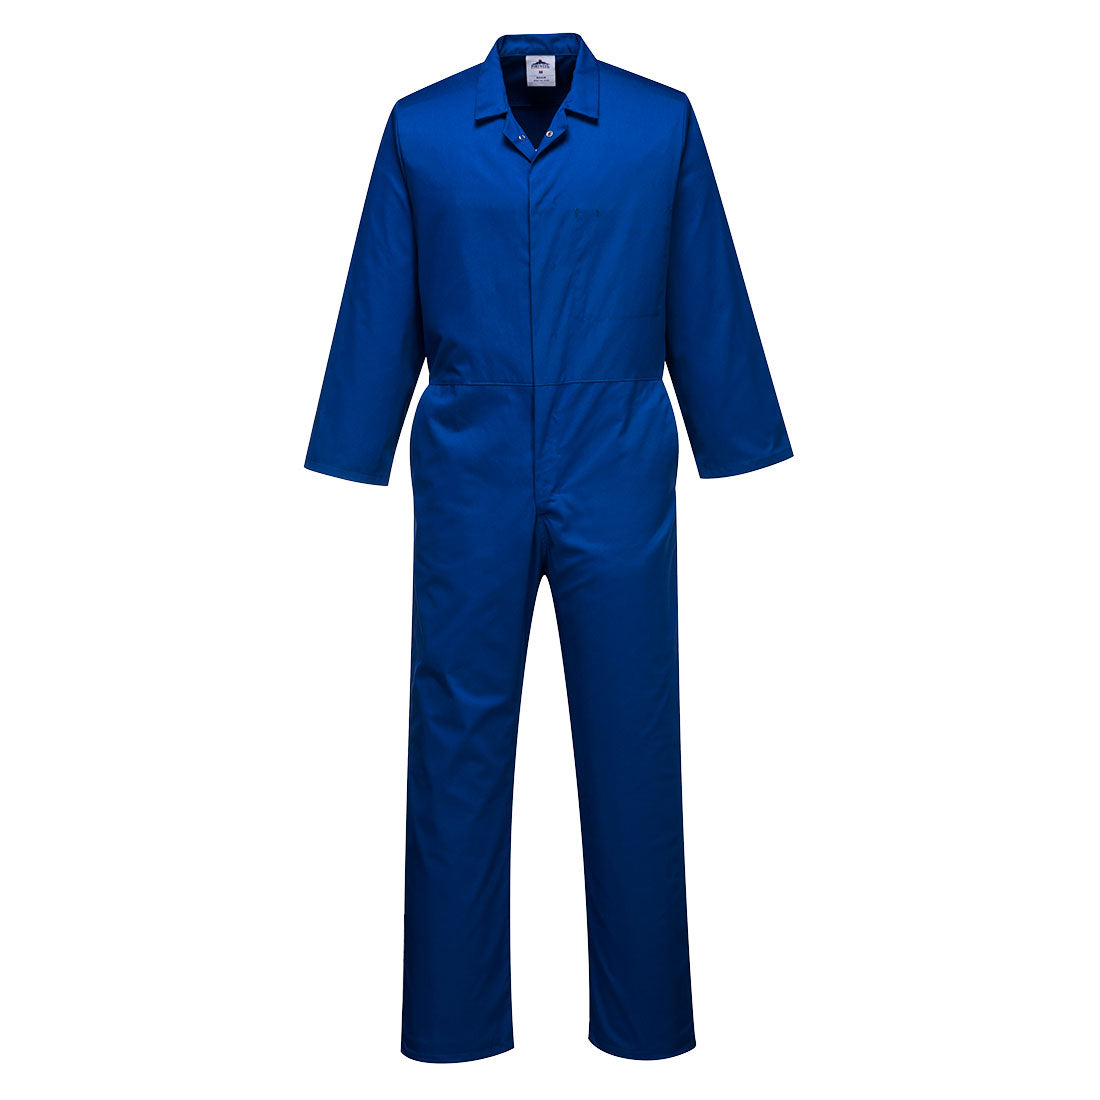 Portwest 2201 - Royal Blue Food Industry Coverall Boiler Suit sz Large Regular